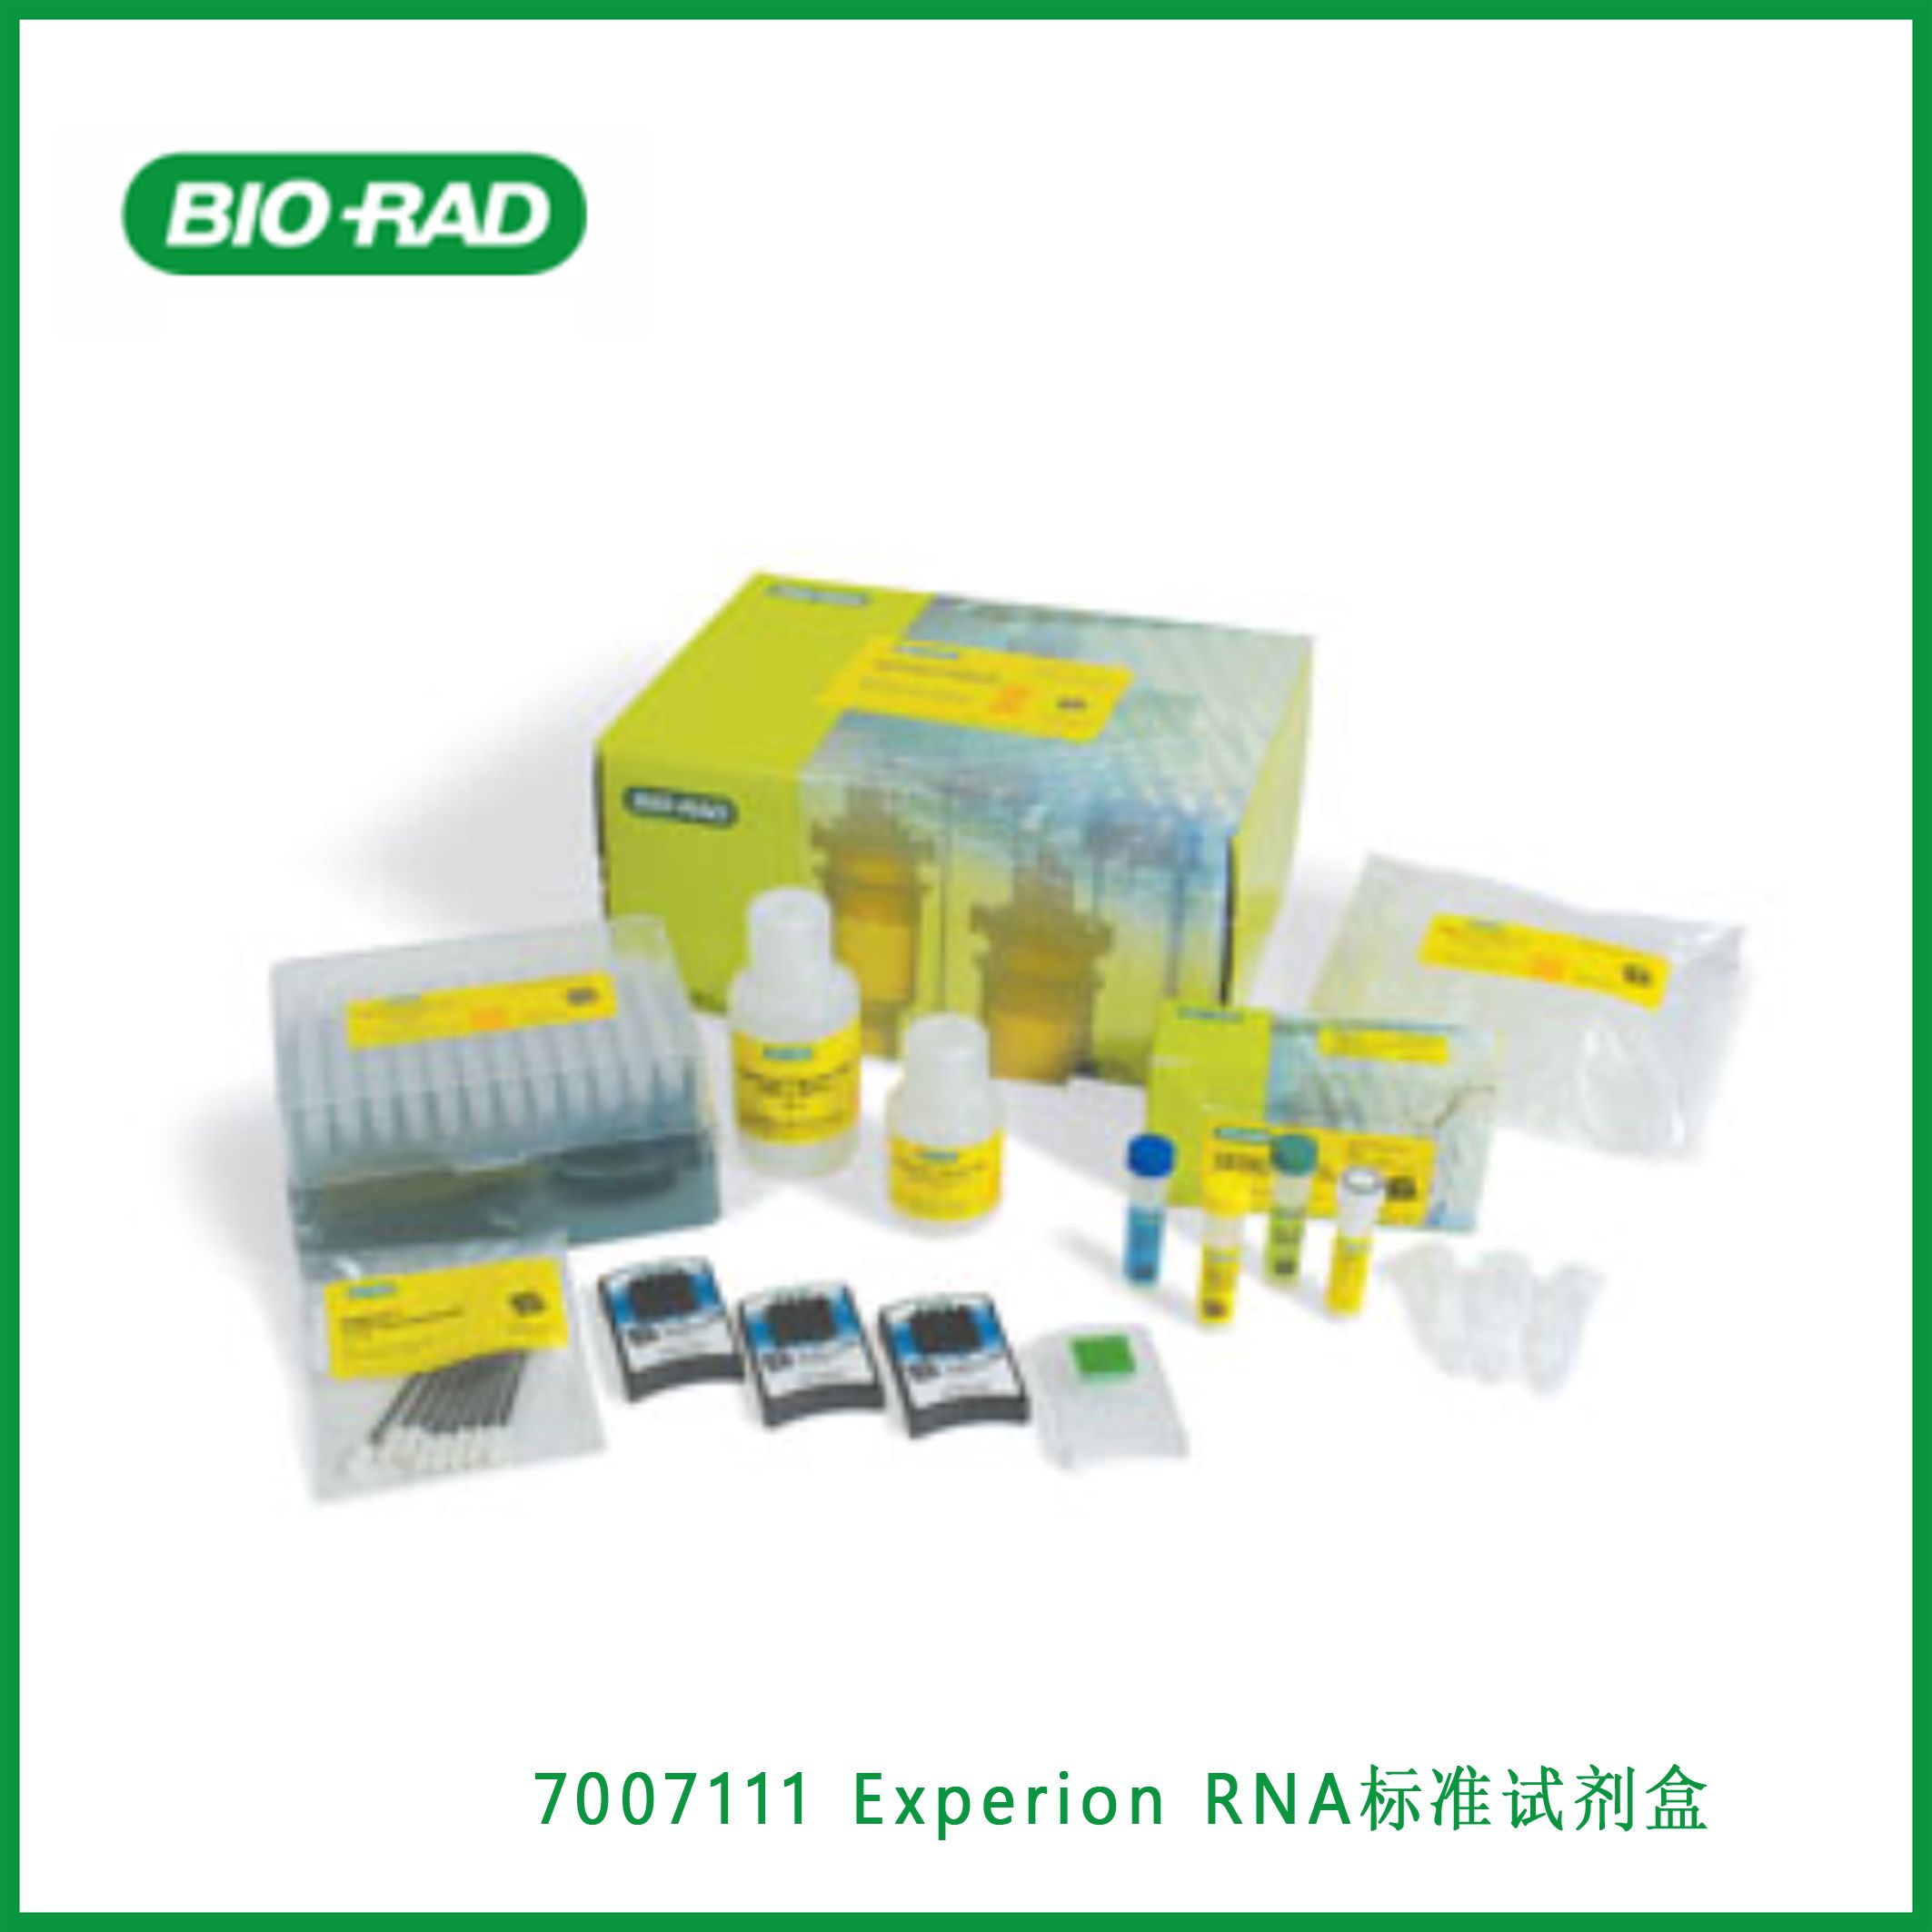 伯乐Bio-Rad7007111 Experion RNA StdSens Starter Kit, Experion RNA标准试剂盒，现货